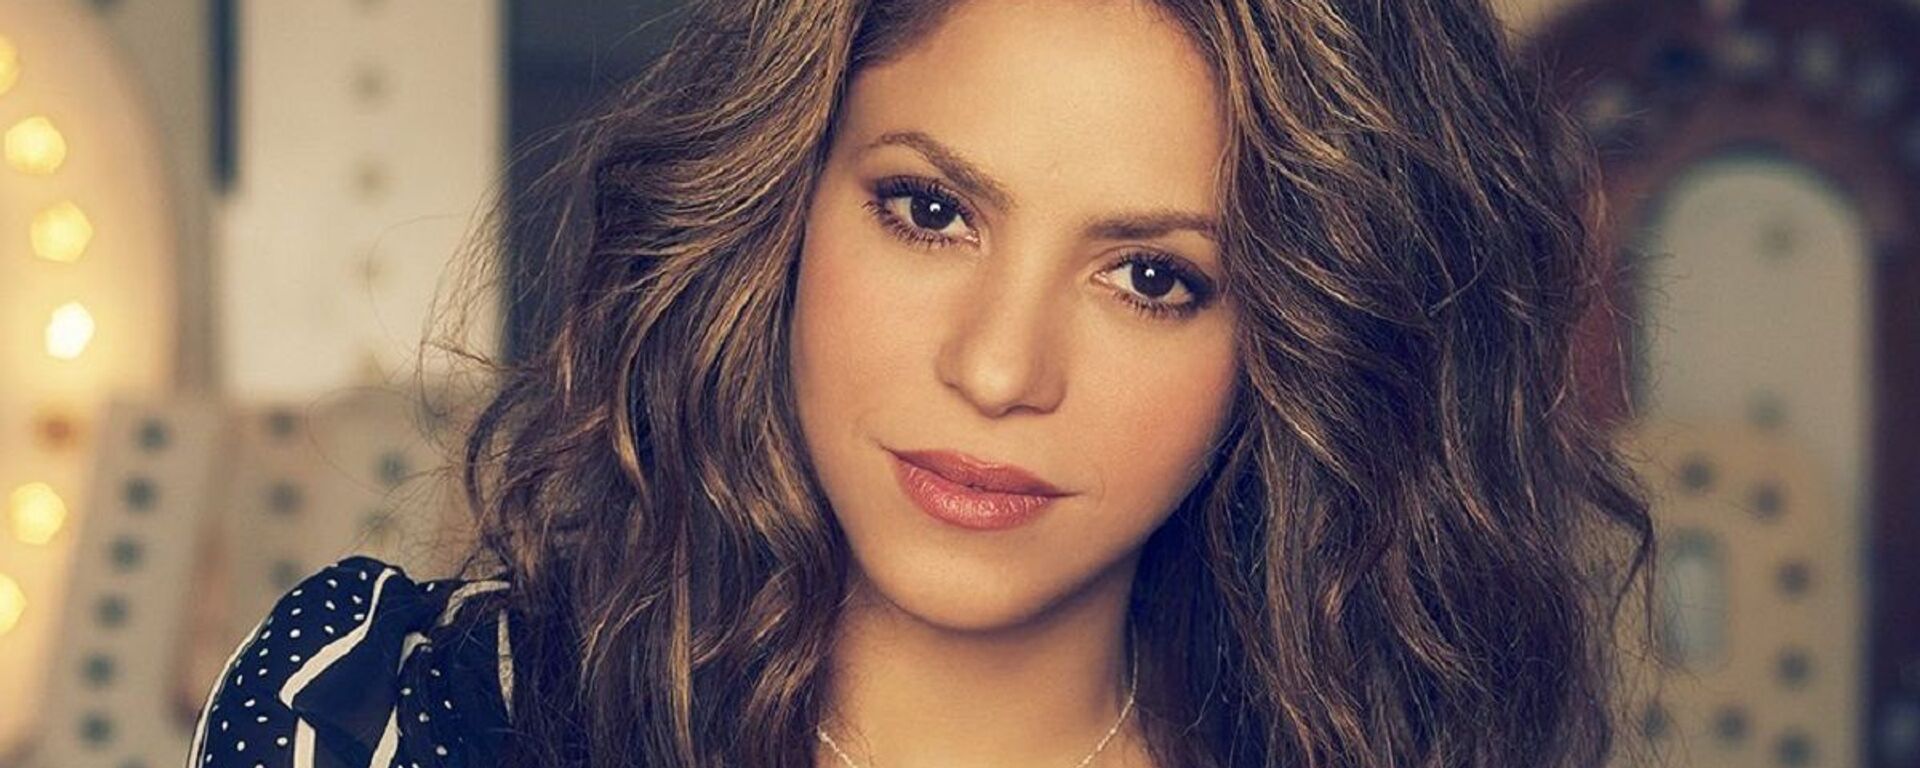 Shakira, cantante colombiana - Sputnik Mundo, 1920, 29.07.2021